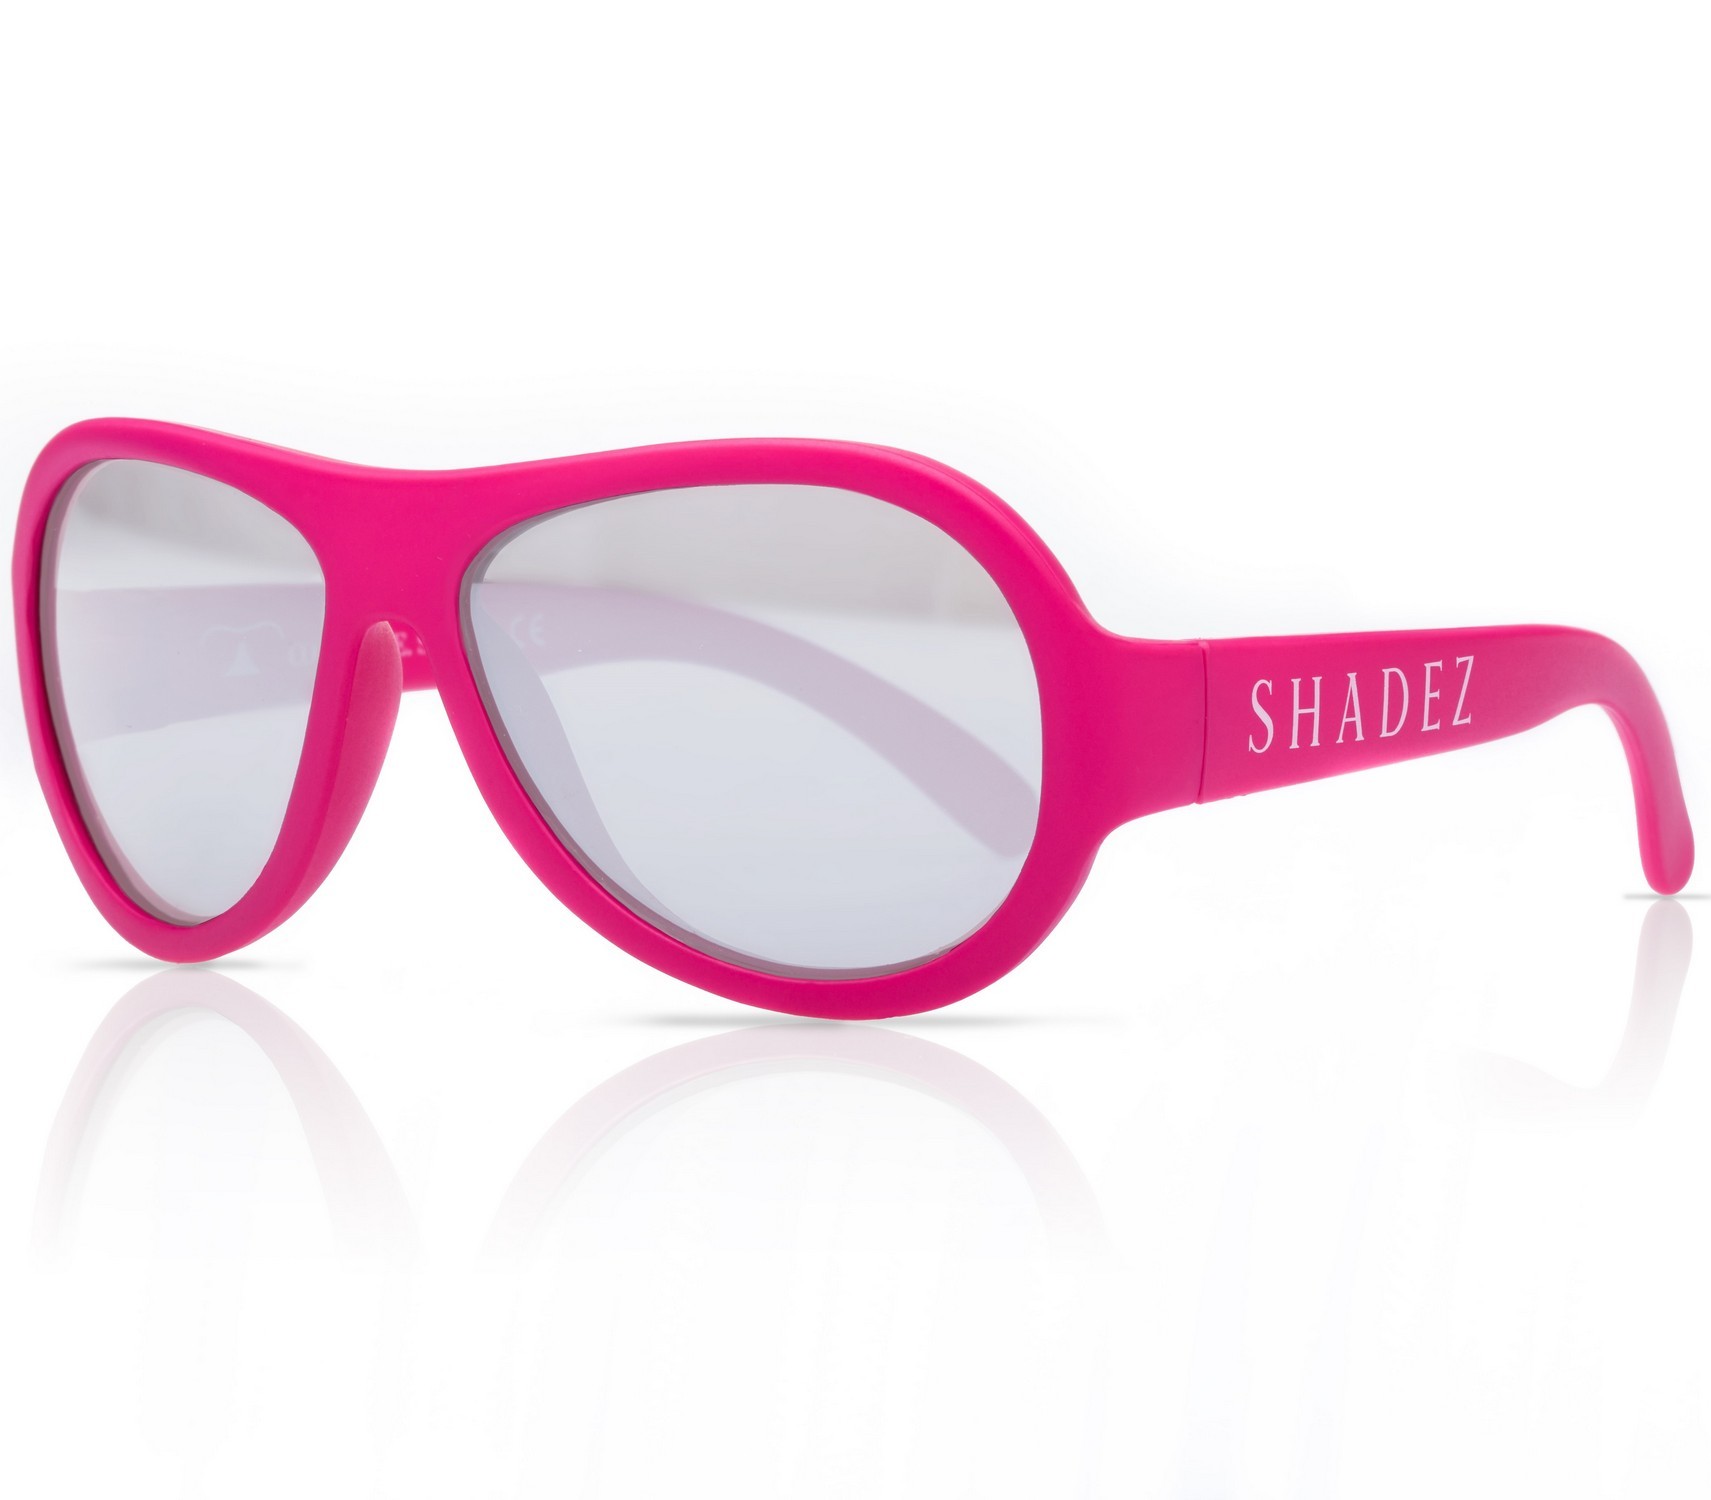 Shadez - UV sunglasses for kids - Classics - Pink